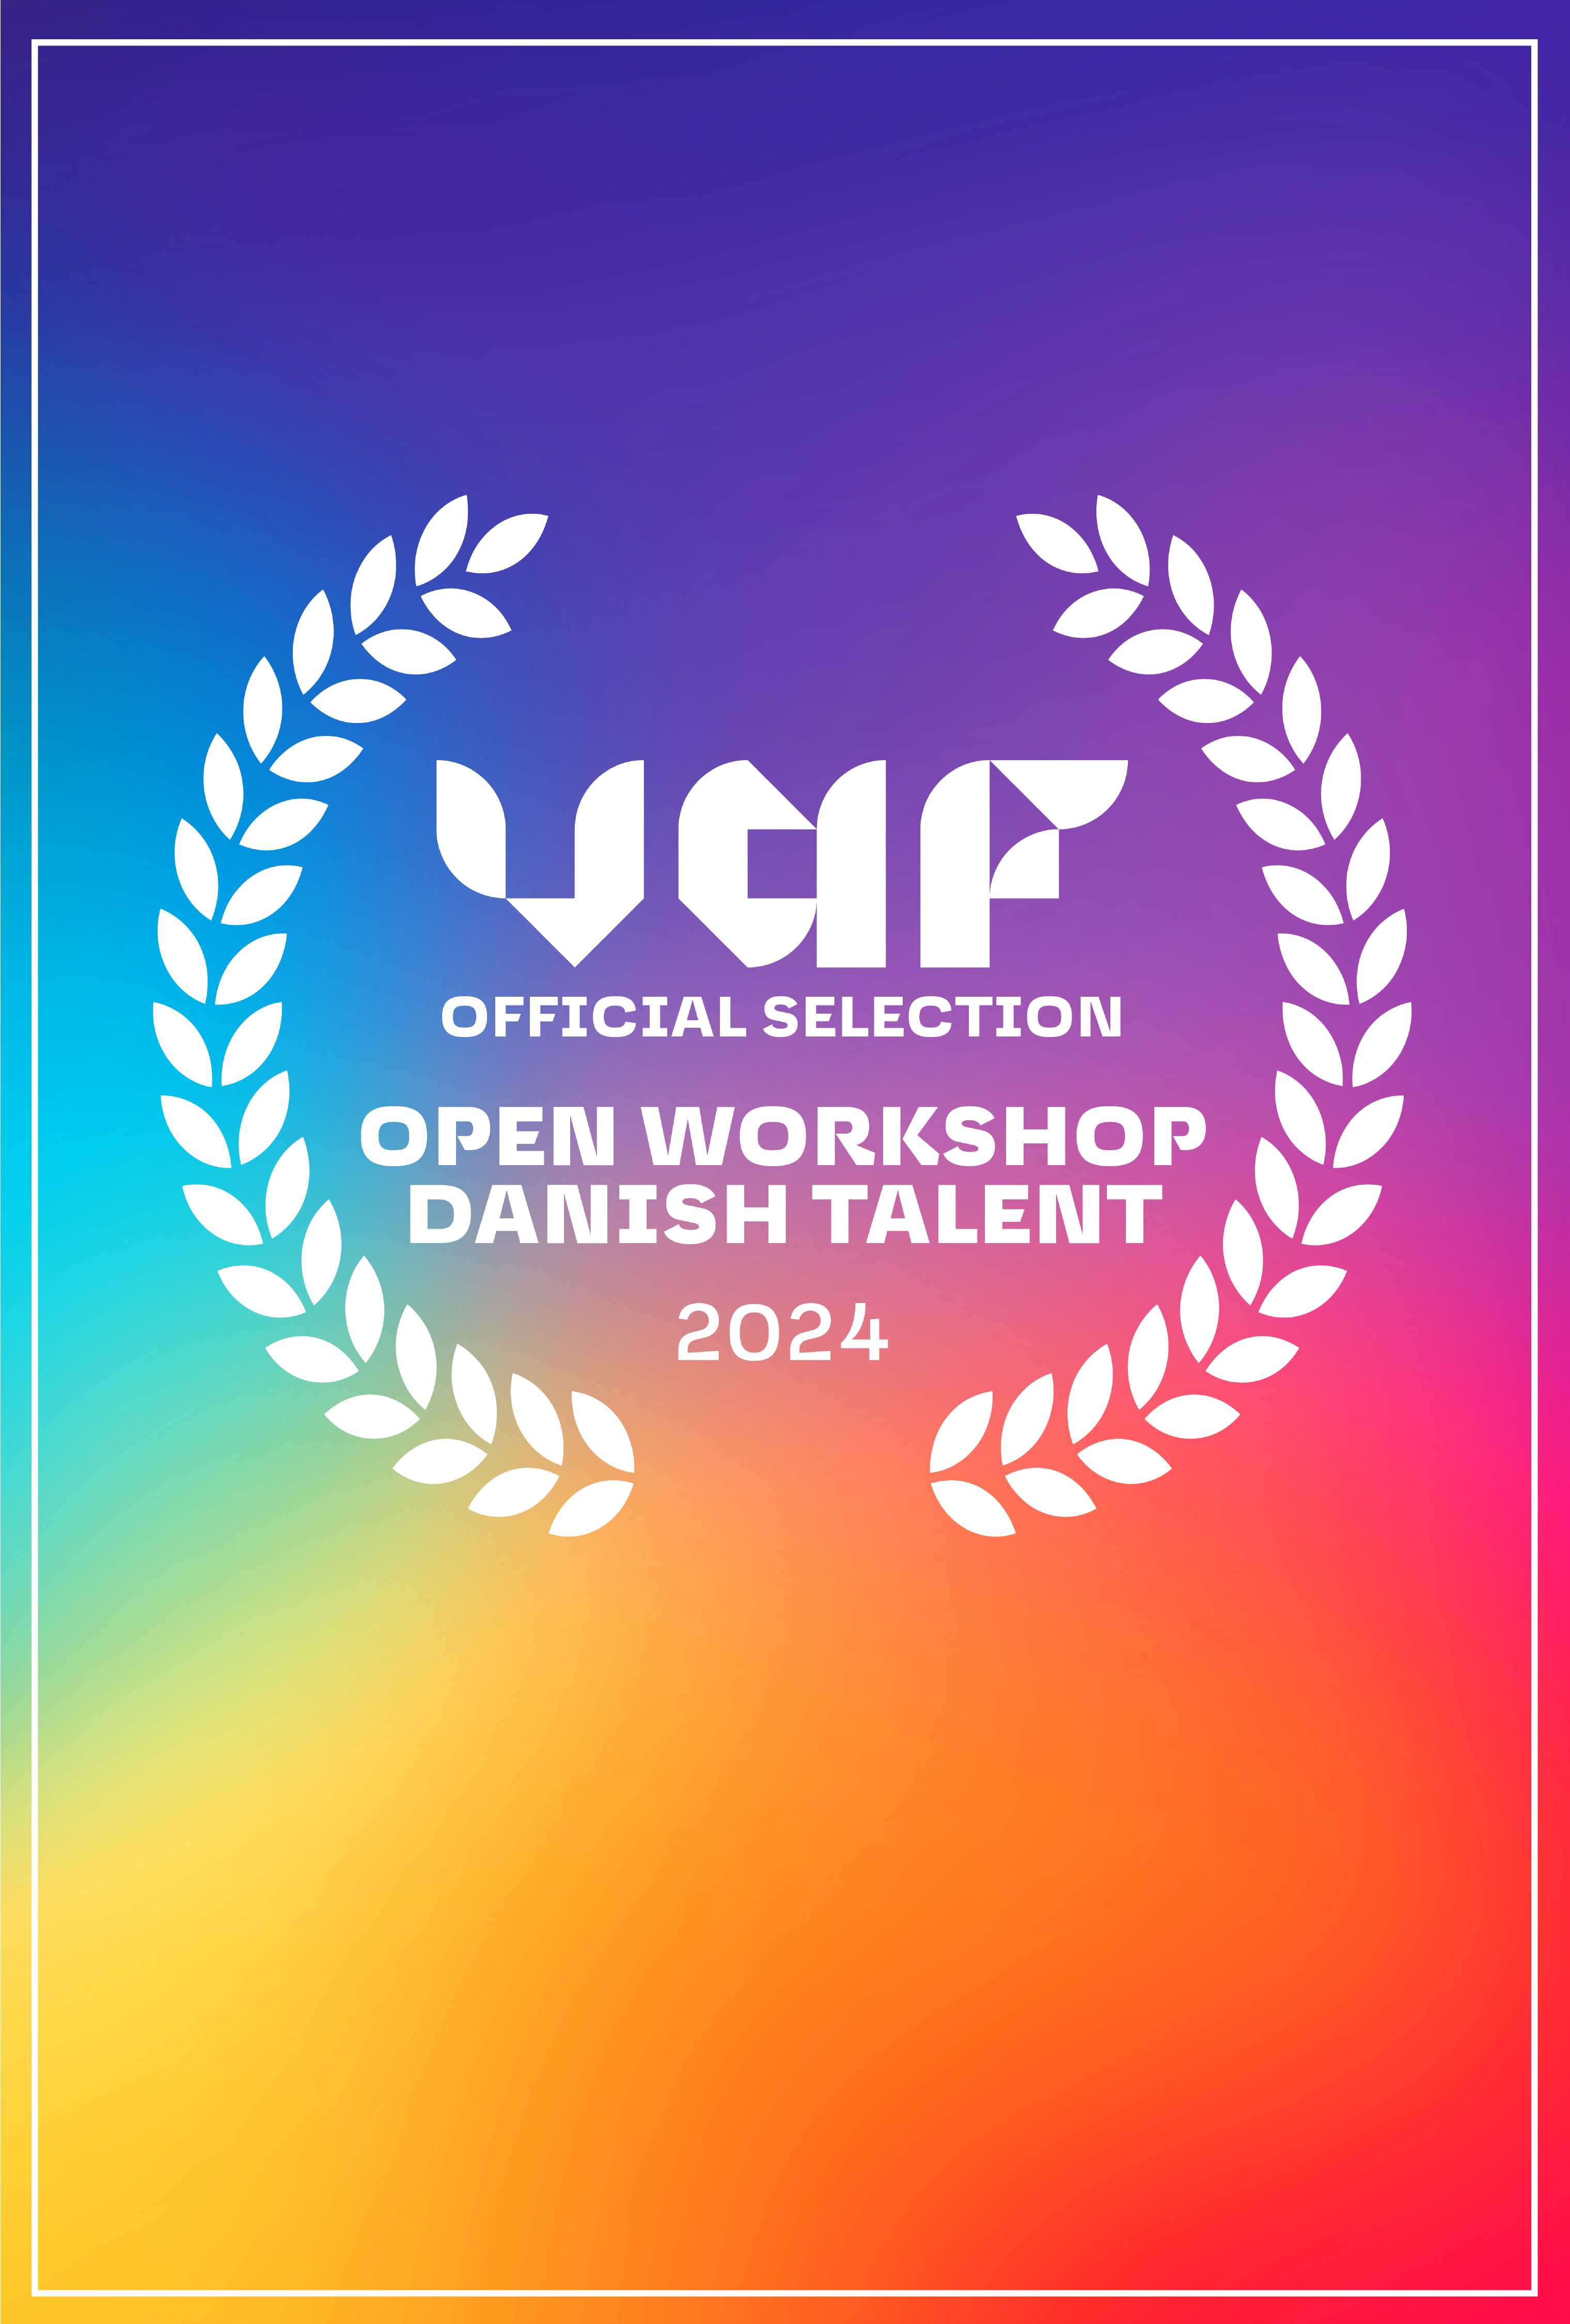 Laurel på en regnbue baggrund med teksten Open Workshop Danish Talent 2024